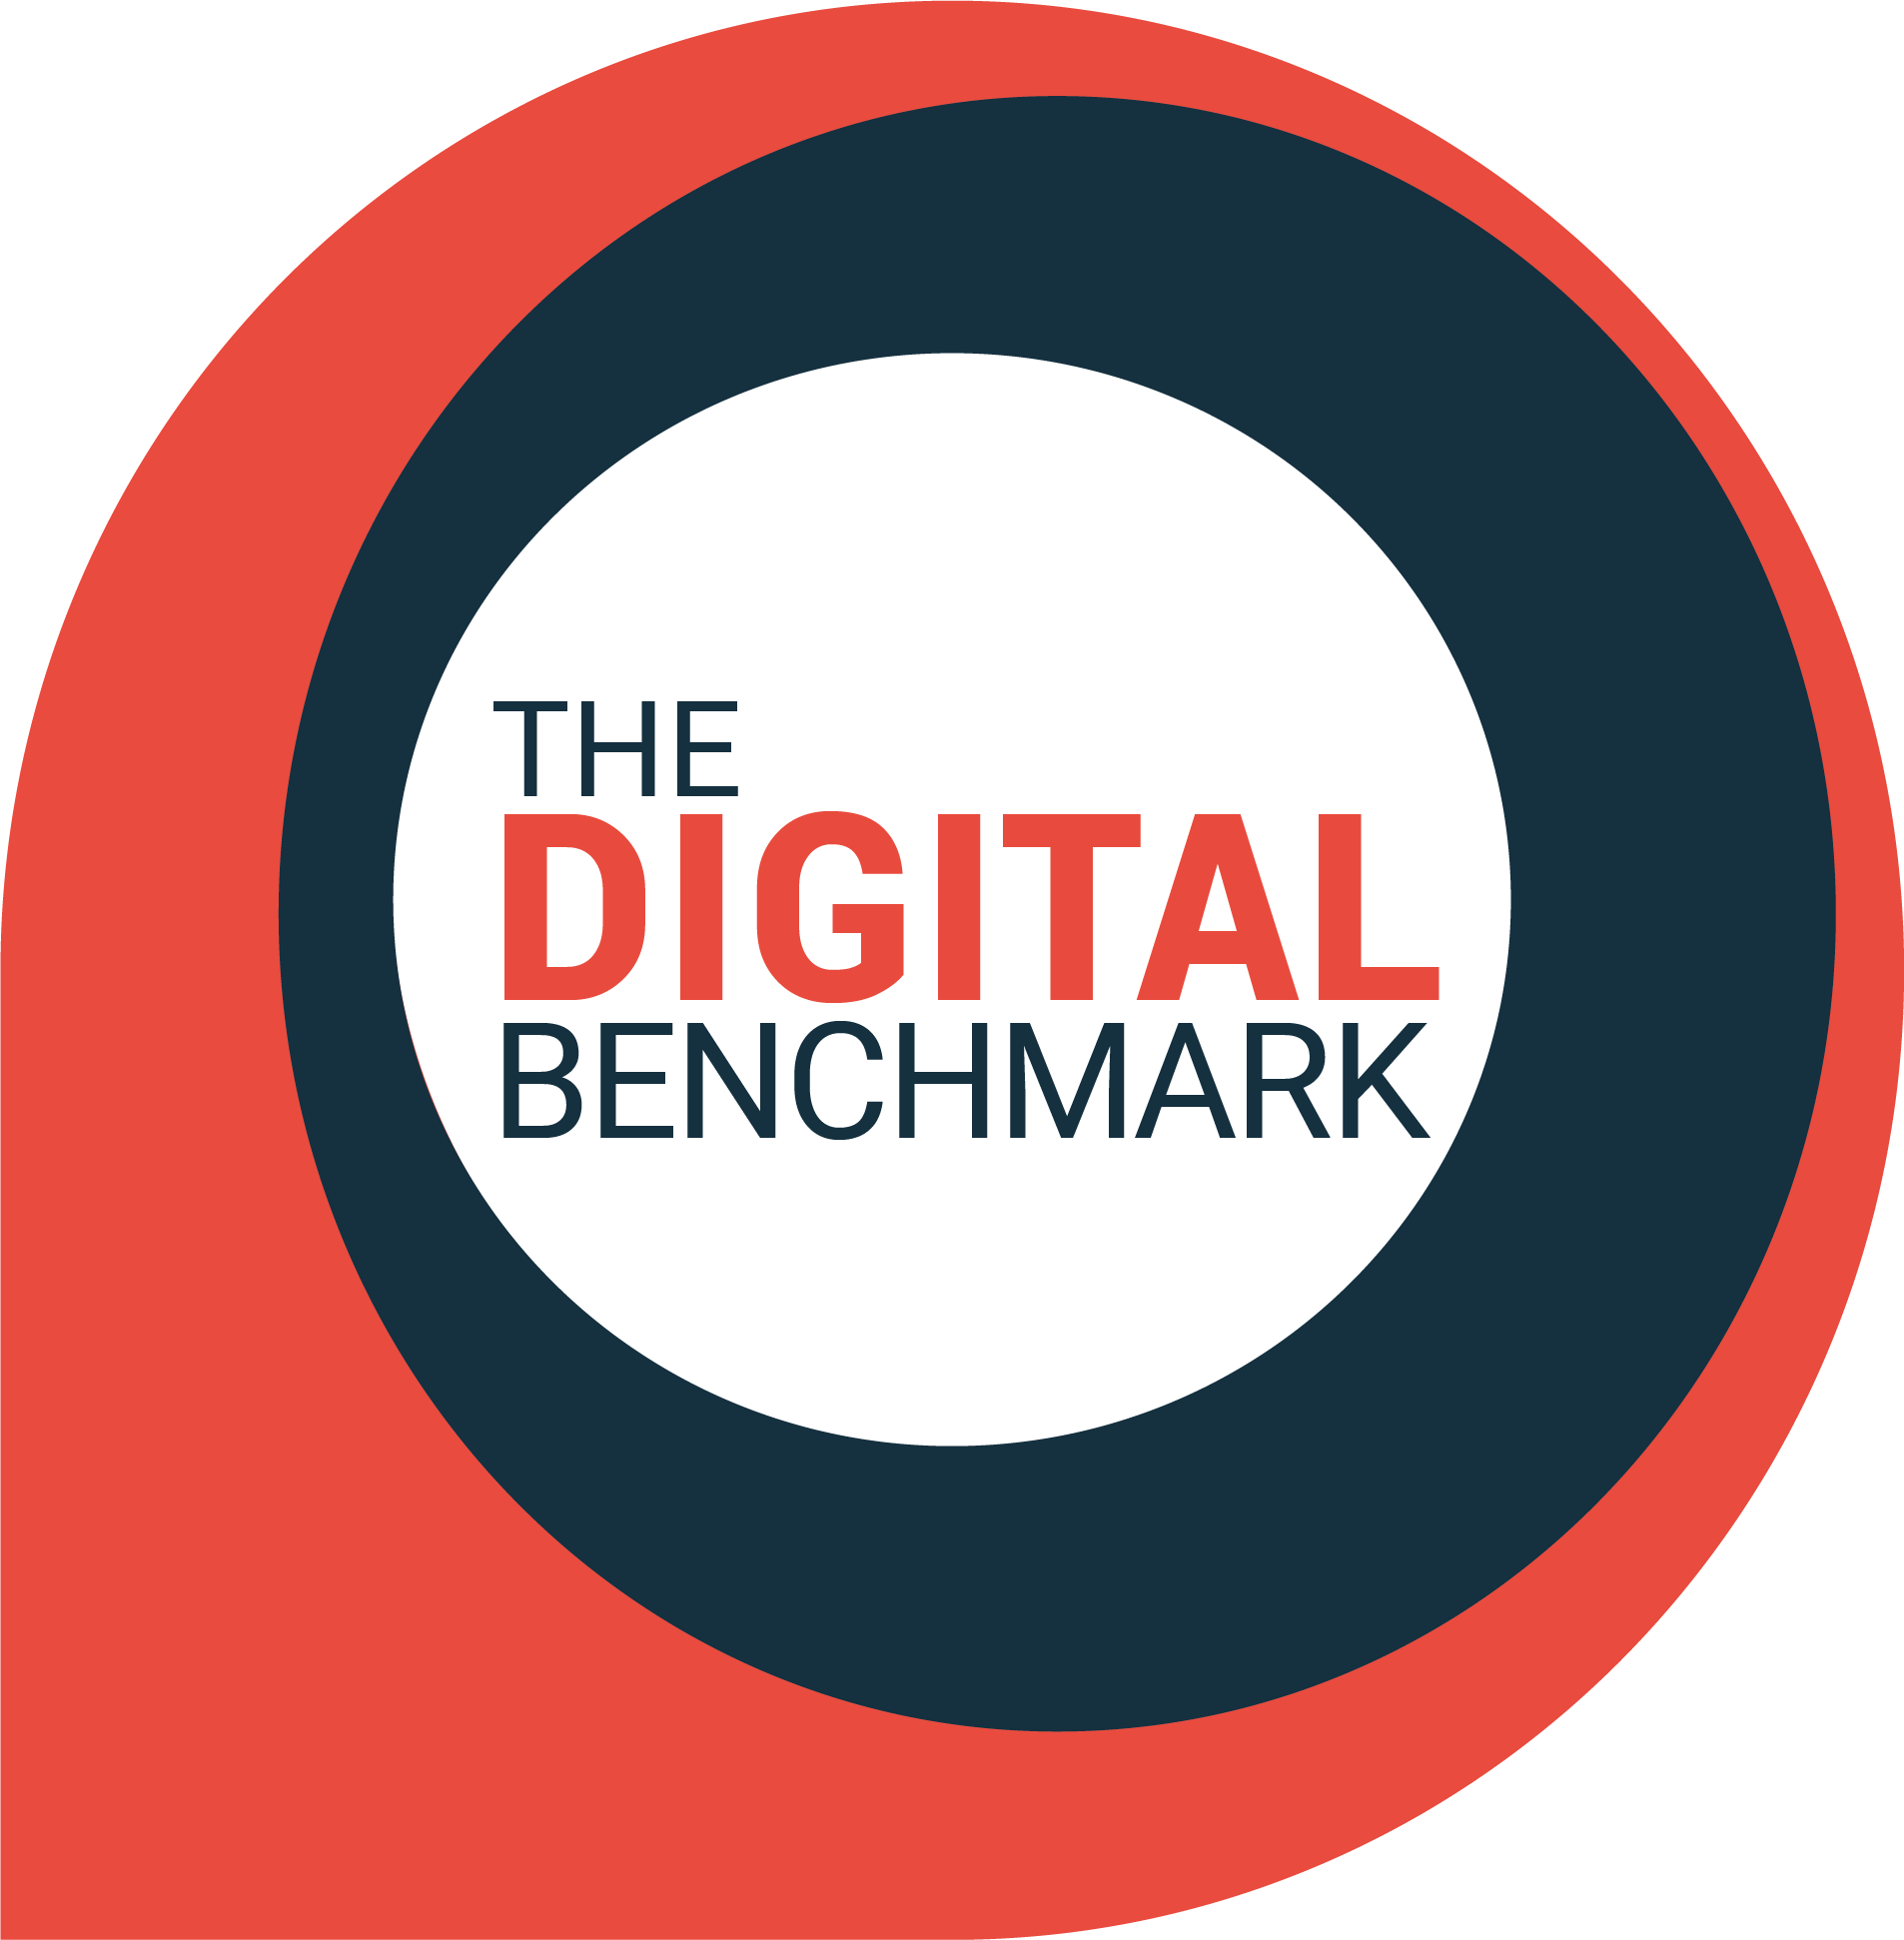 The Digital Benchmark